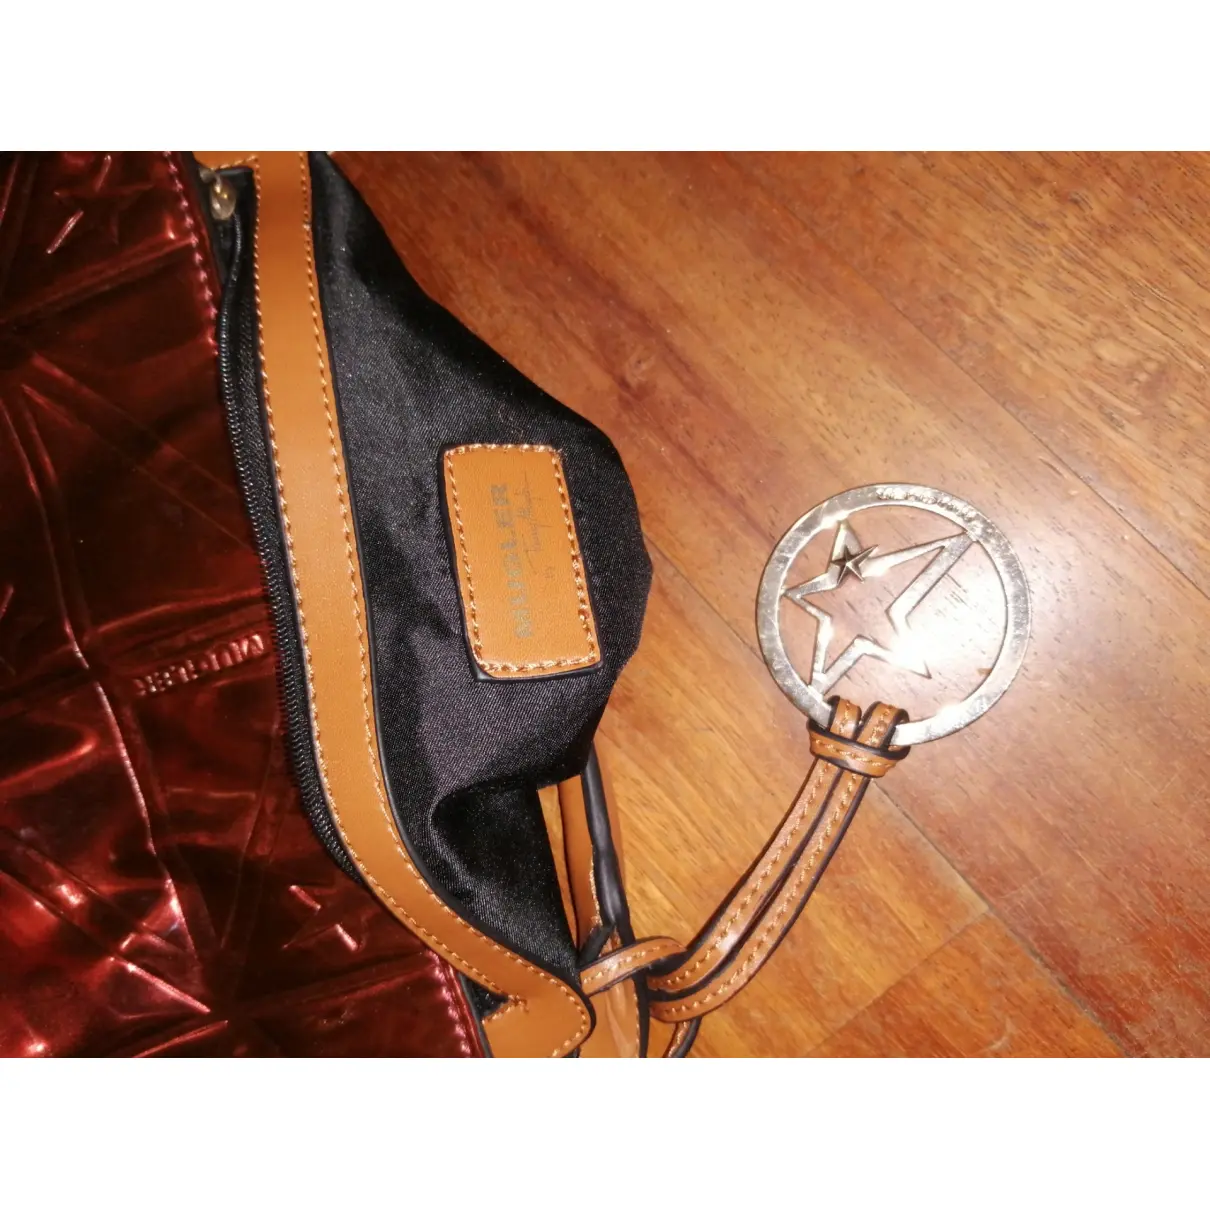 Patent leather handbag Thierry Mugler